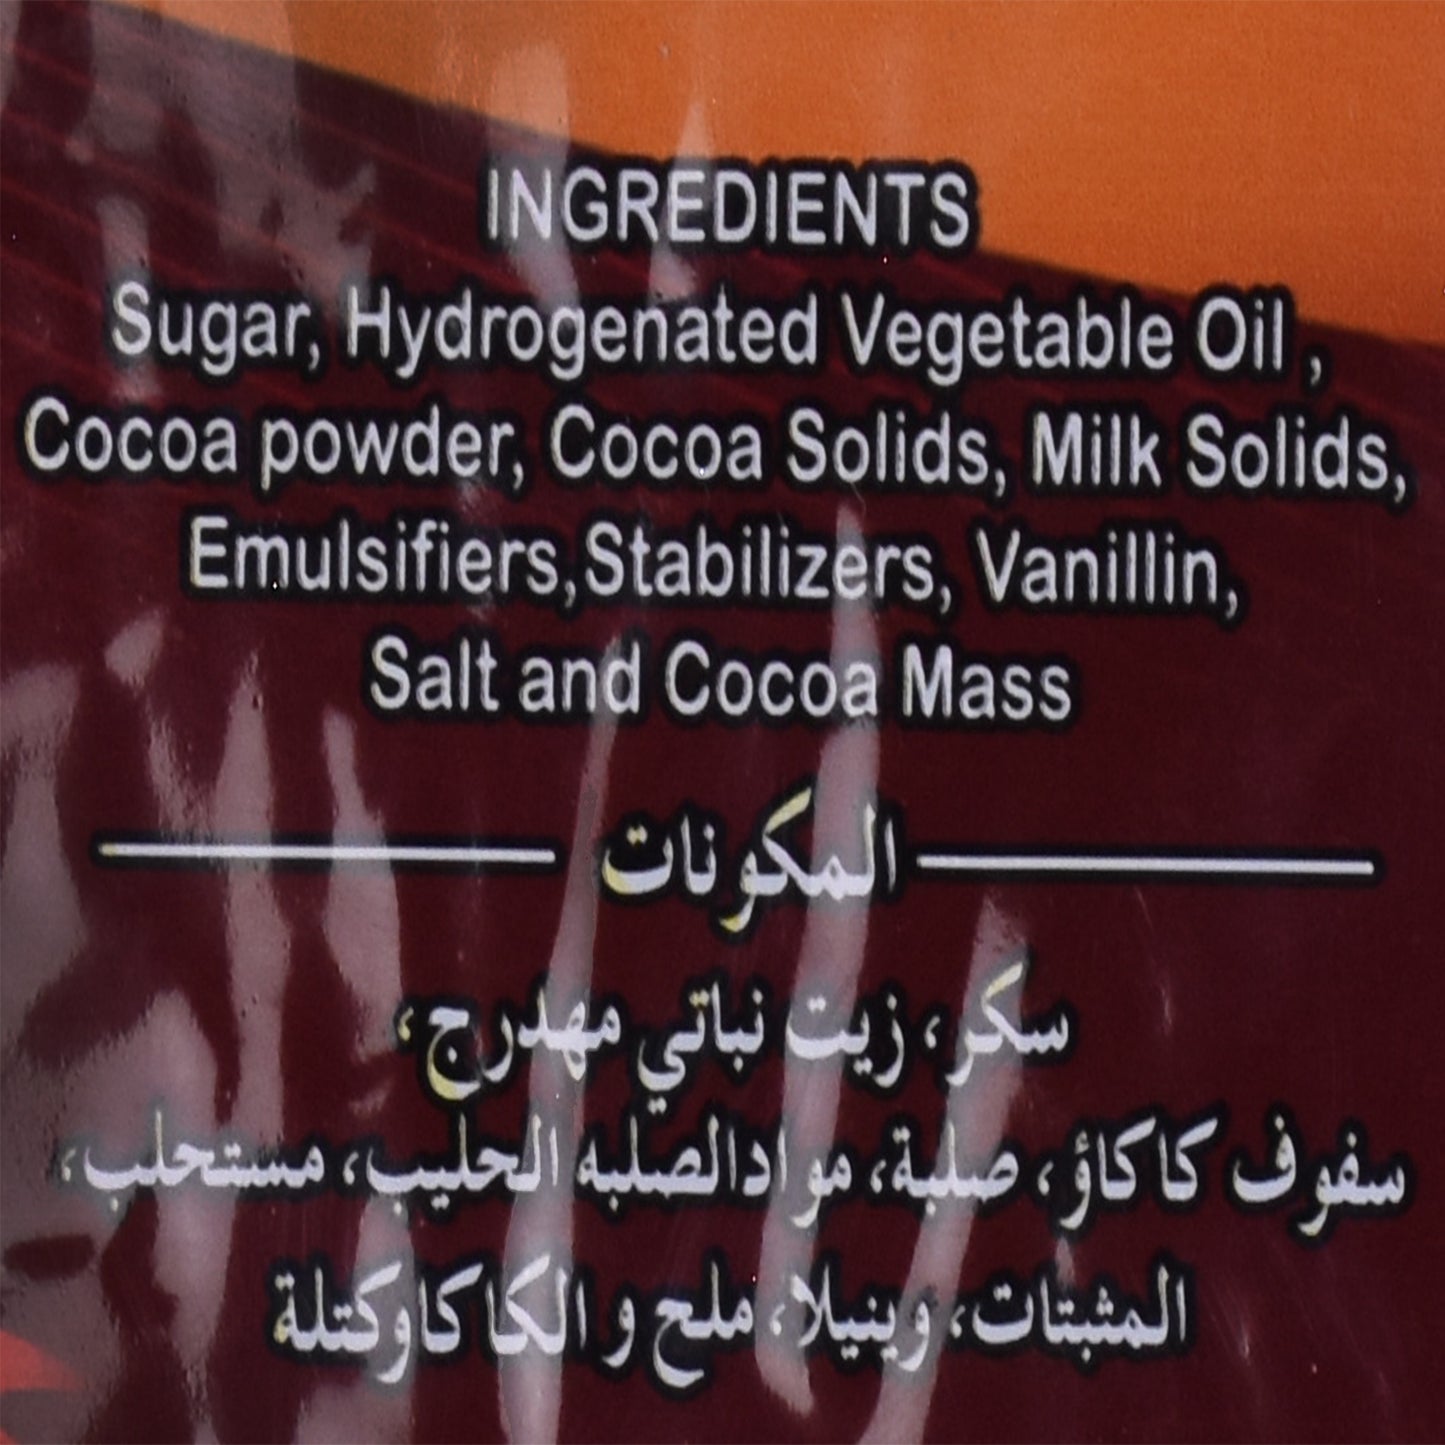 Milkyz Food Choco House Dark Chocolate Compound 2KG Slab